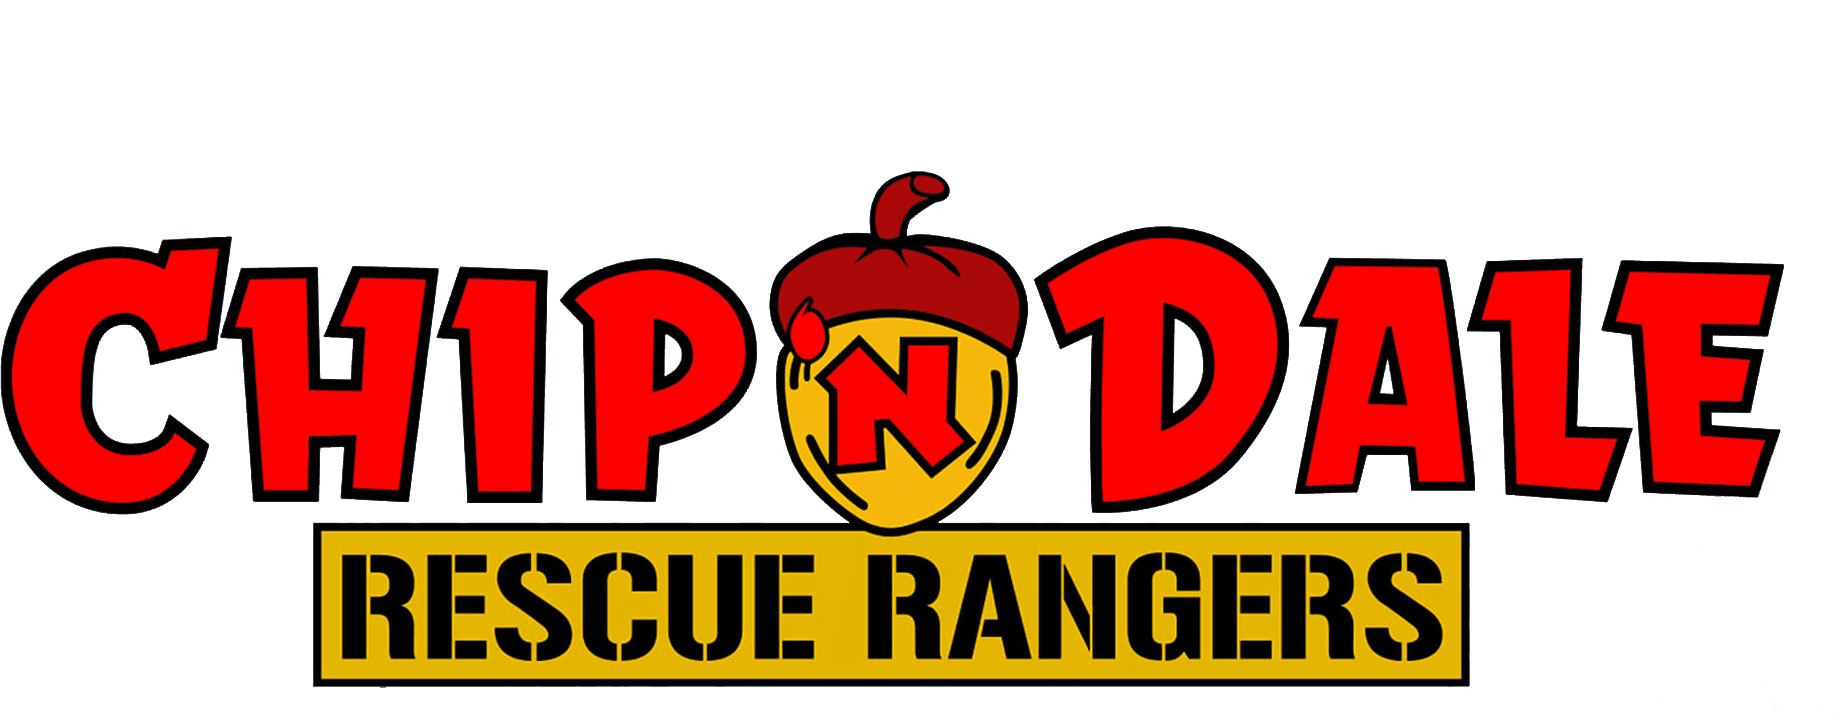 Chip 'n' Dale Rescue Rangers logo